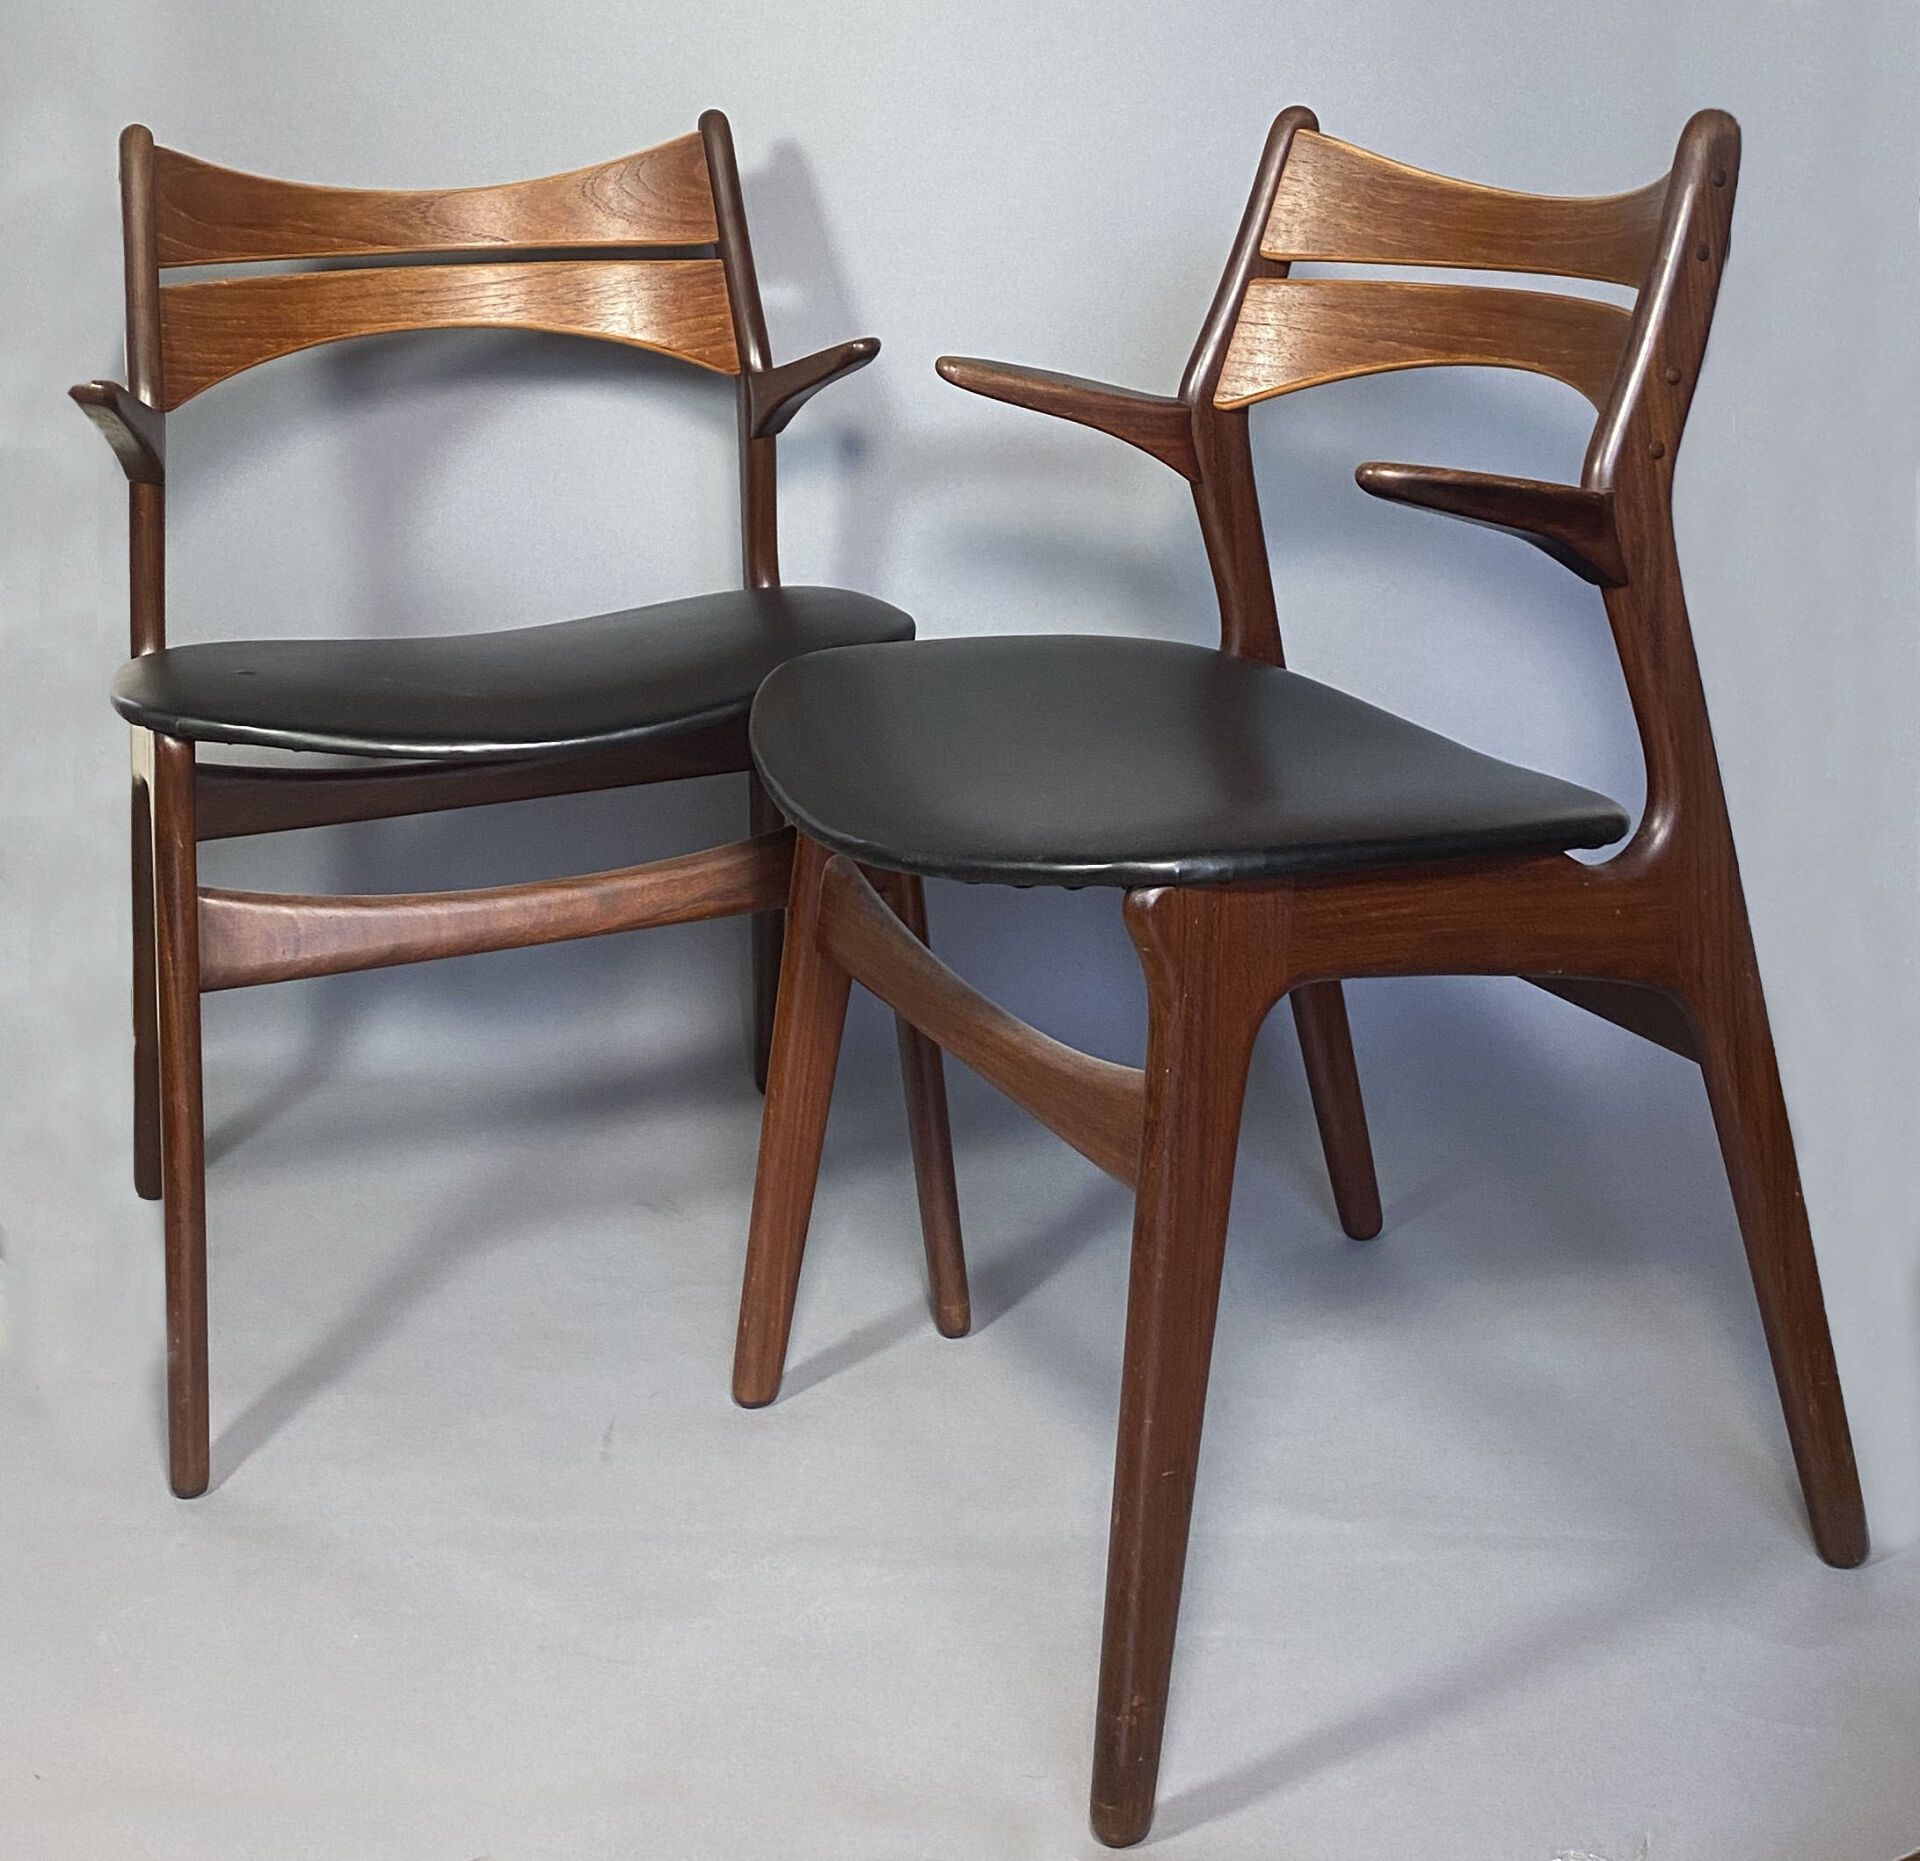 Null Erik BUCH (1923-1982)

Coppia di sedie in legno naturale. 

Seduta flottant&hellip;